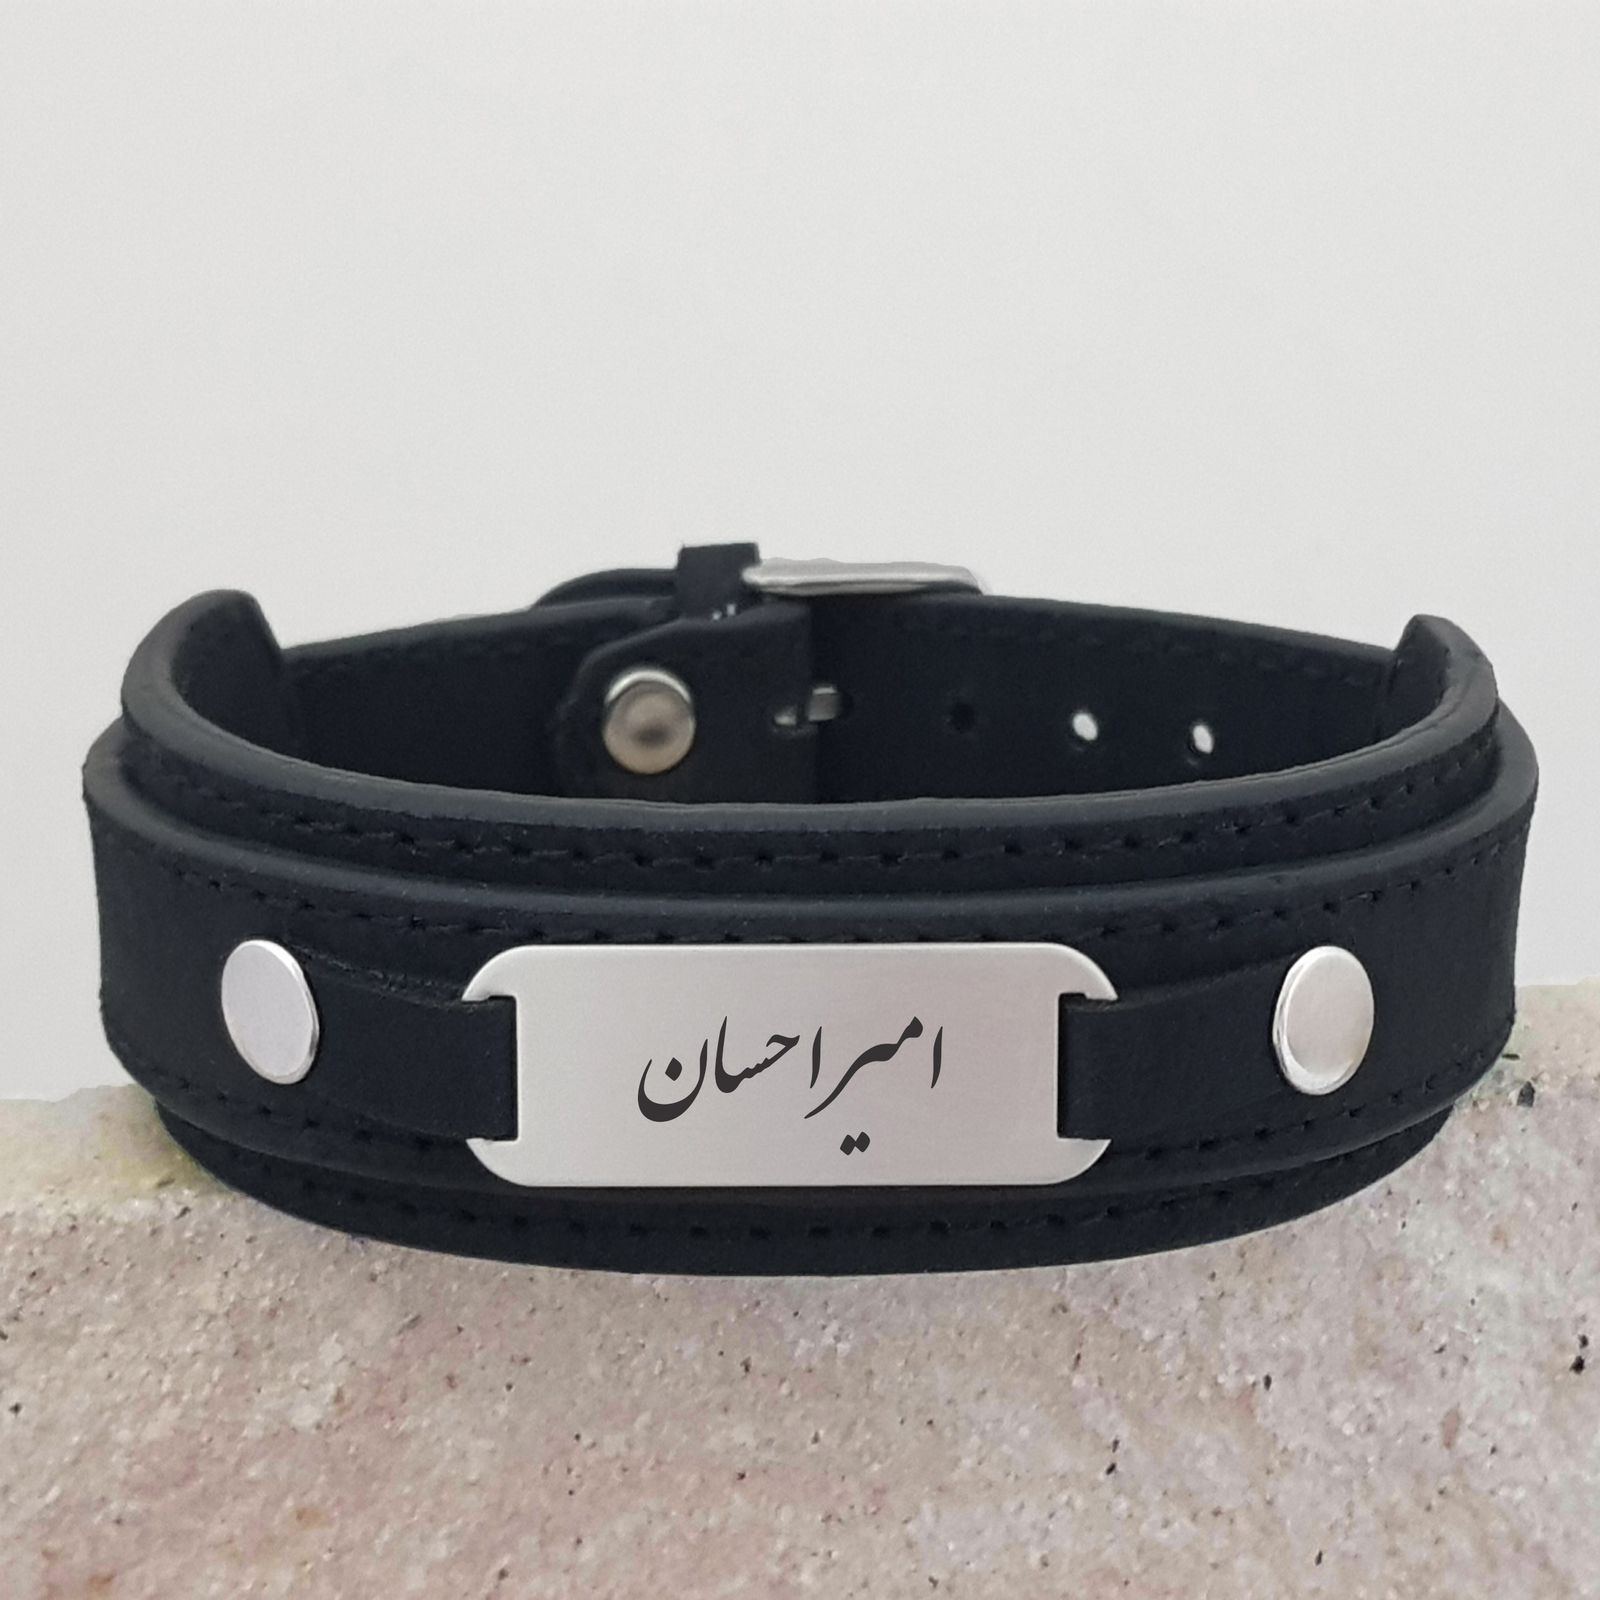 دستبند نقره مردانه ترمه ۱ مدل امیر احسان کد Dcsf0245 -  - 2